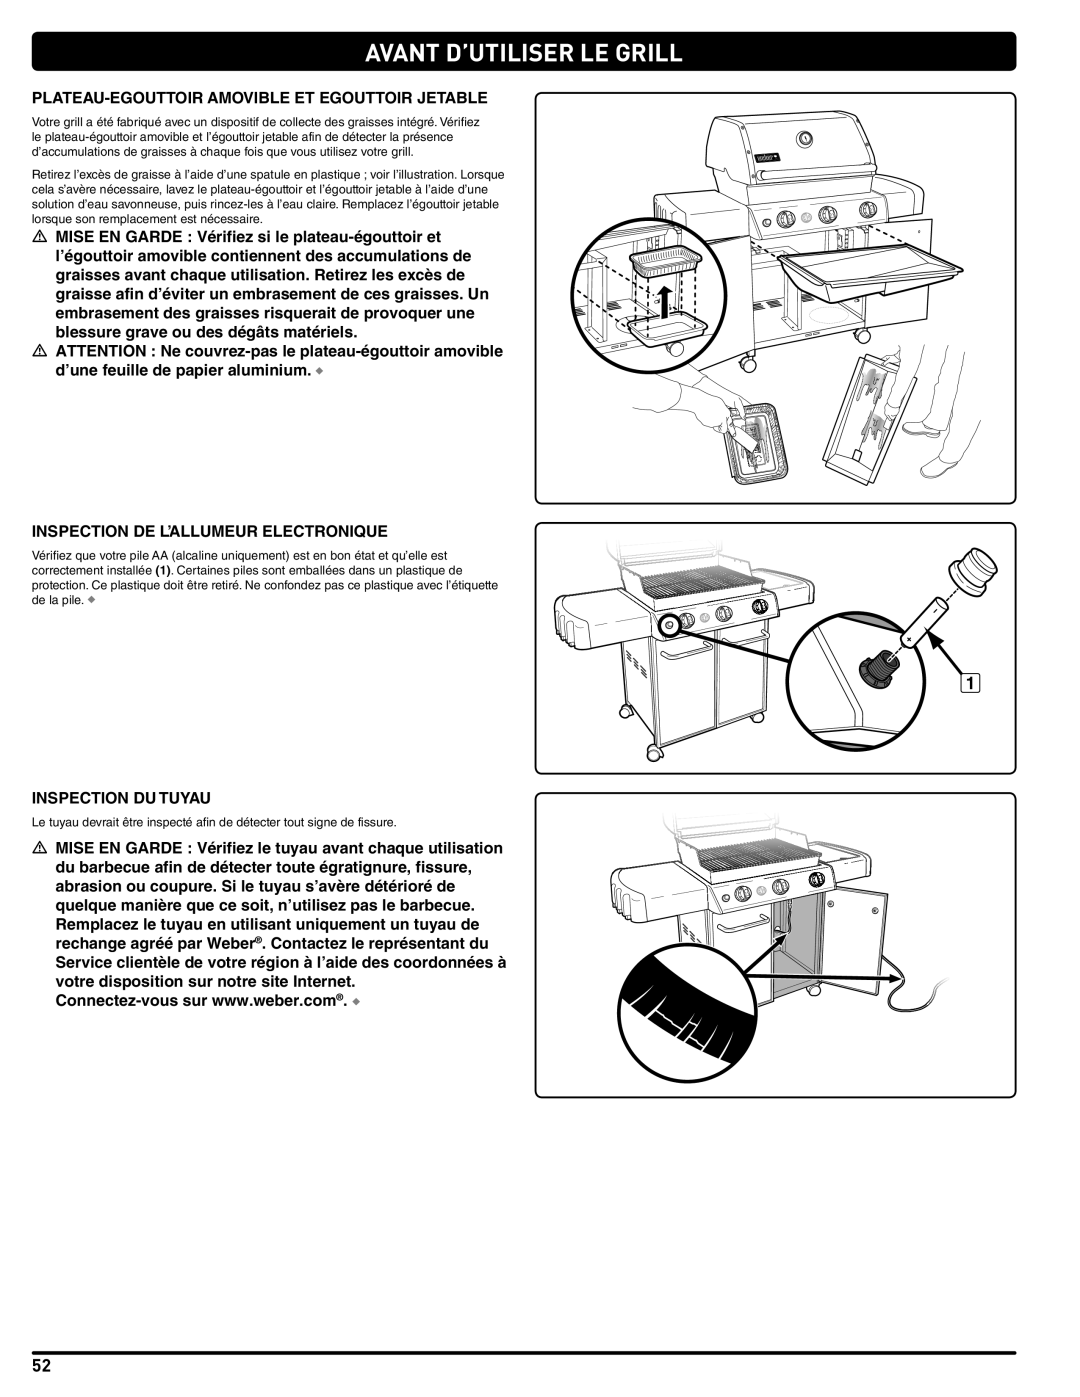 Weber 56515 manual Avant D’Utiliser Le Grill 